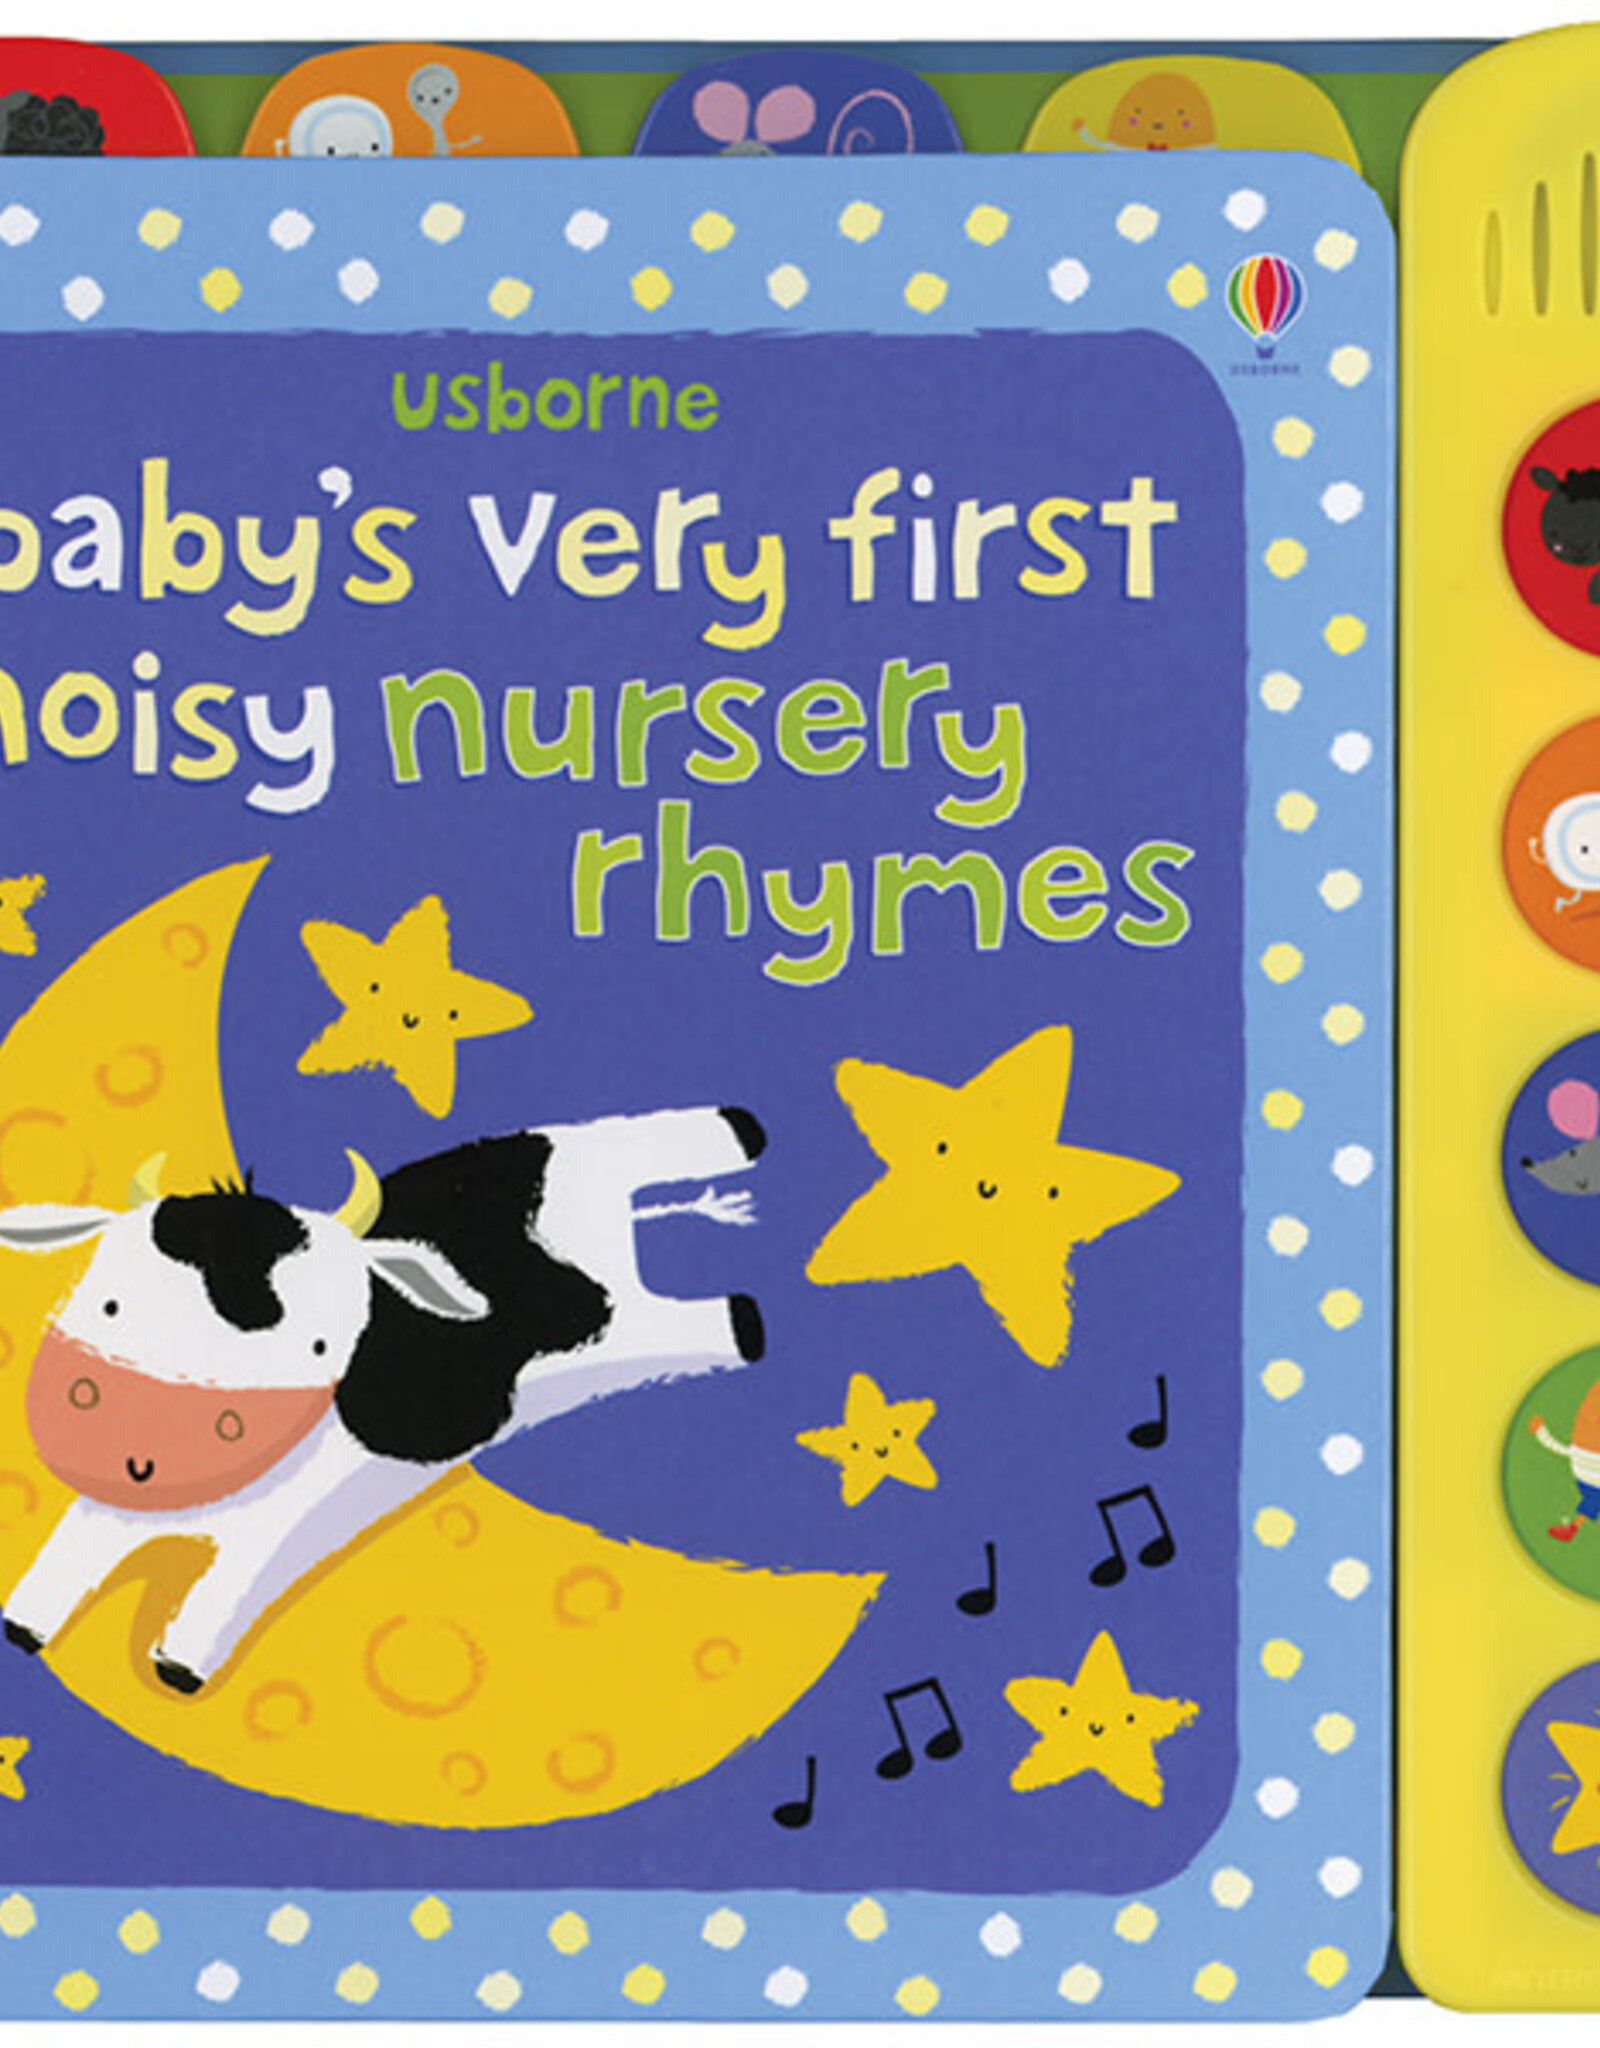 Usborne & Kane Miller Books Bvf Noisy Nursery Rhymes